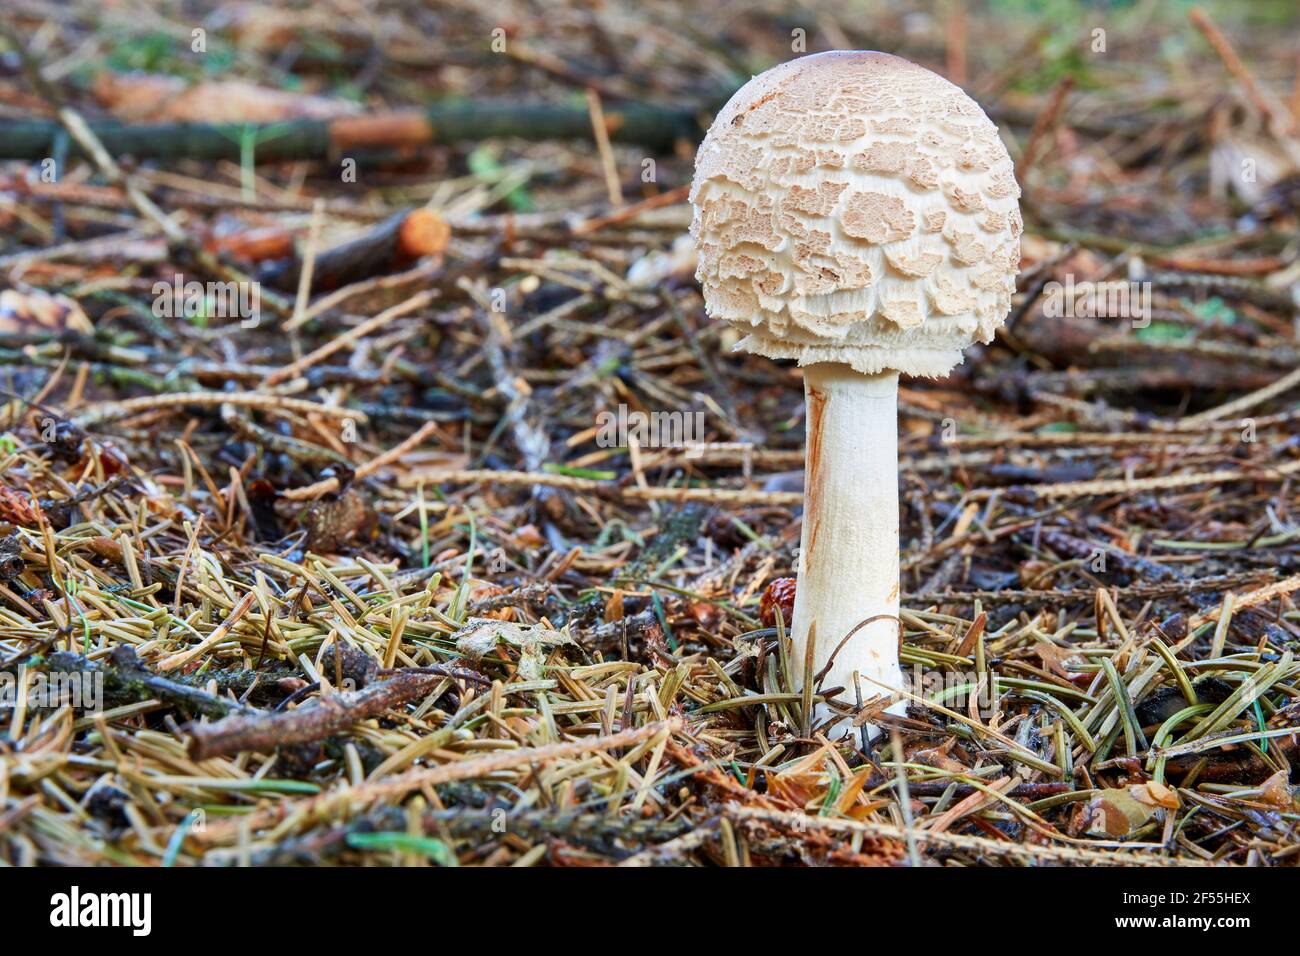 Chlorophyllum rachodes - edible mushroom. Fungus in the natural environment. English: Shaggy parasol Stock Photo